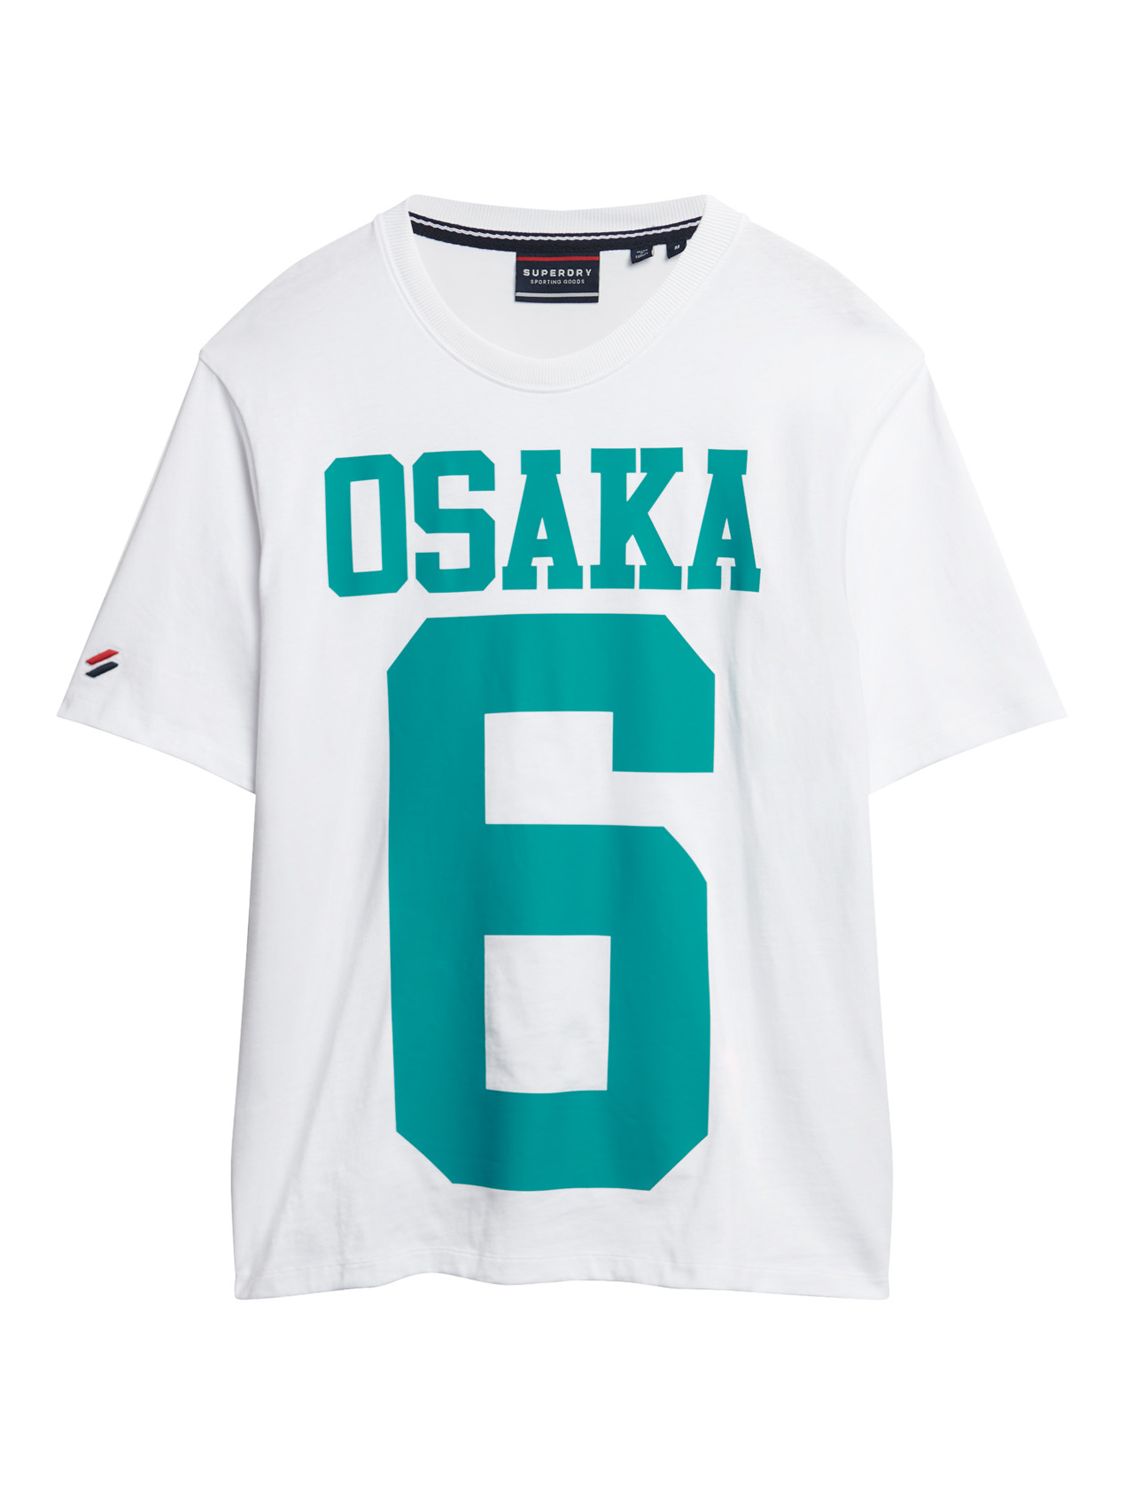 Superdry Osaka Logo Loose T-Shirt, Brilliant White, L